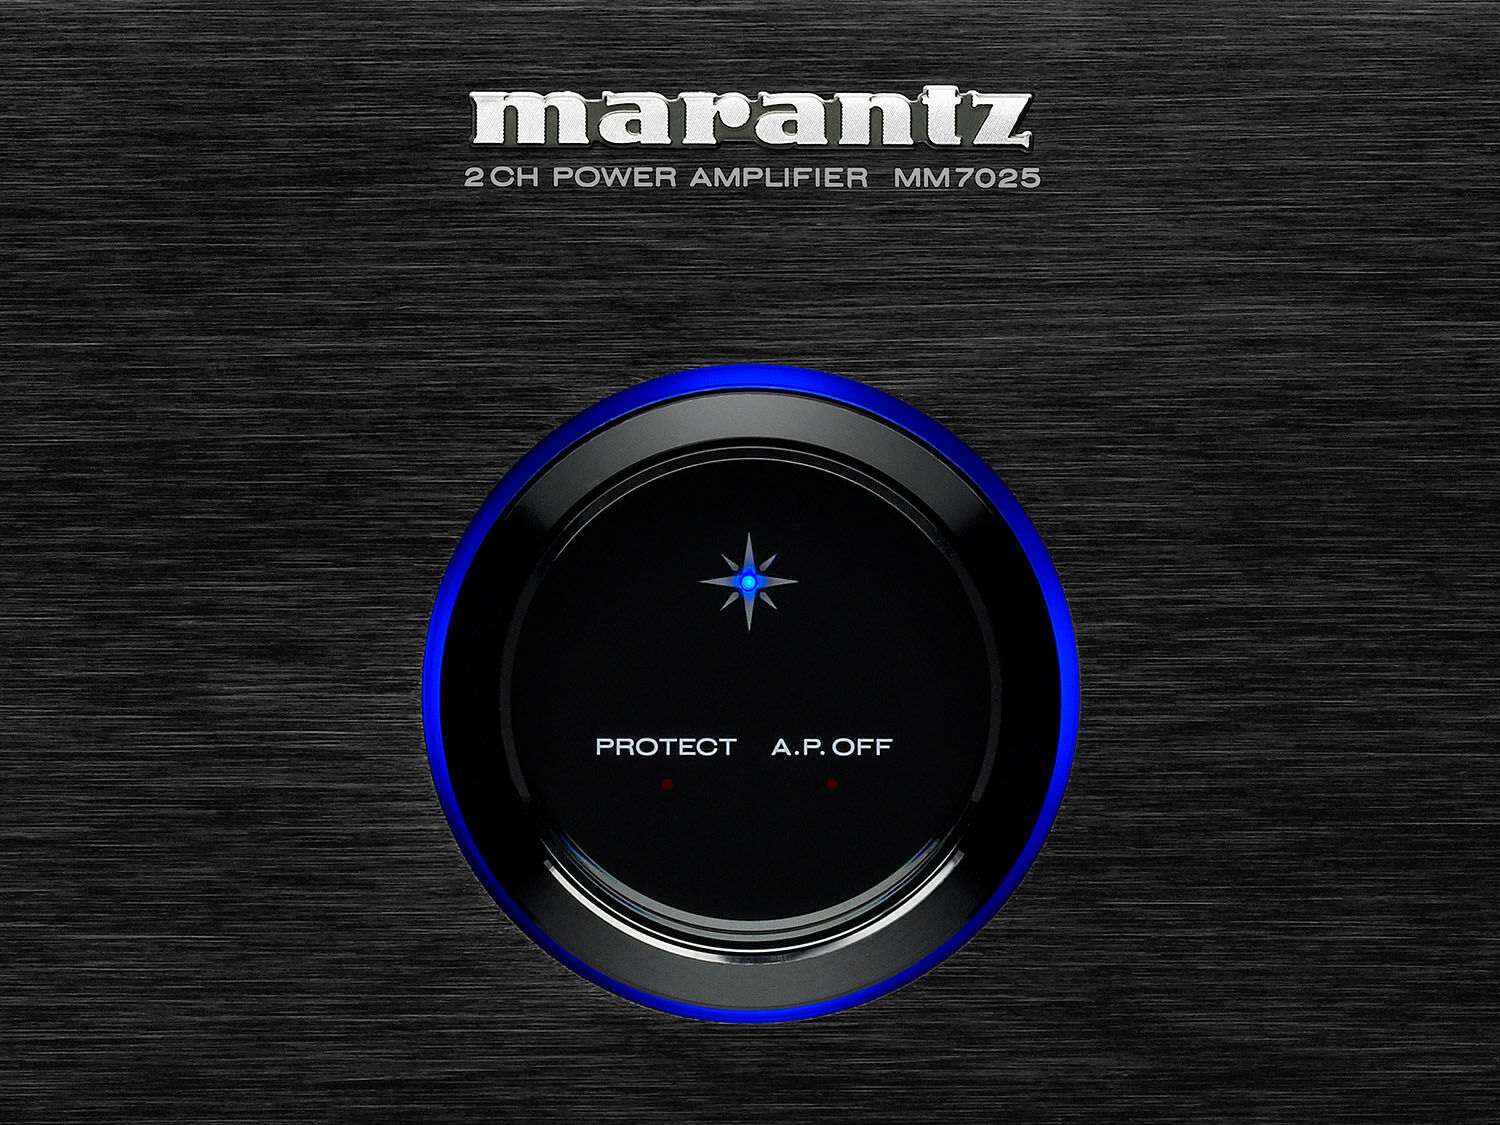 MM7025 - 2 Channel Power Amplifer with 140W | Marantz - US